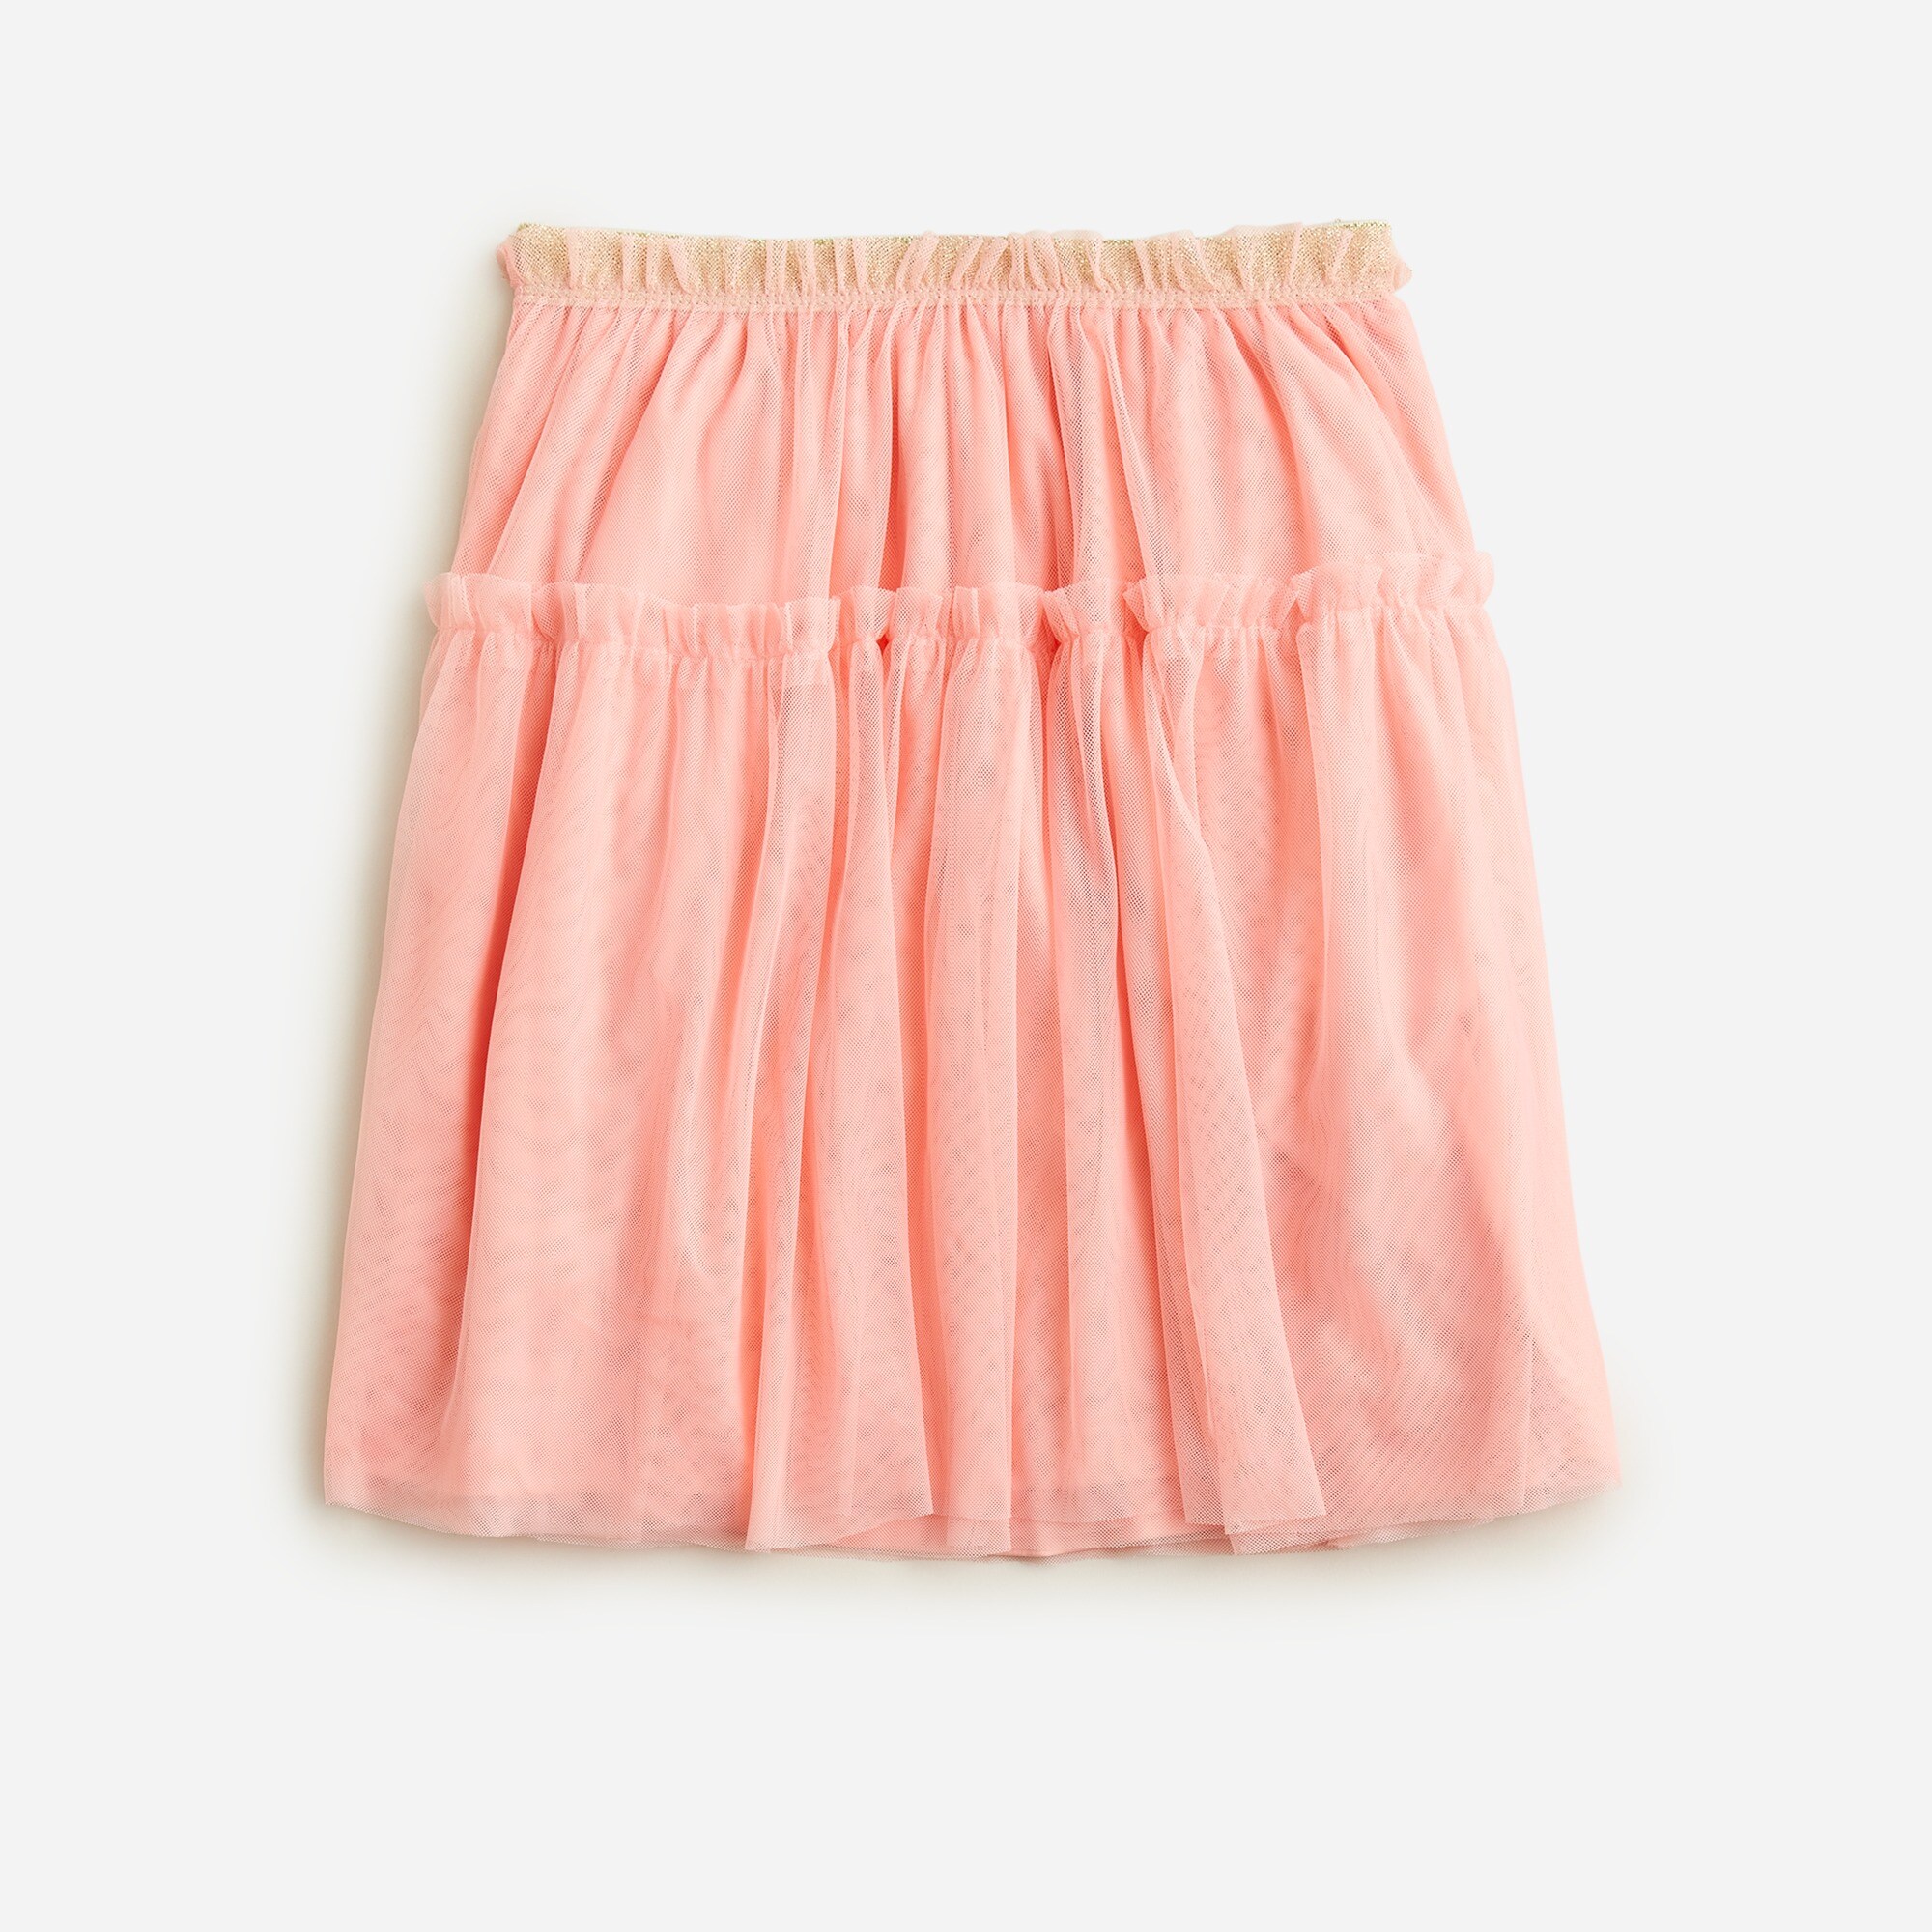  Girls' tiered tulle skirt